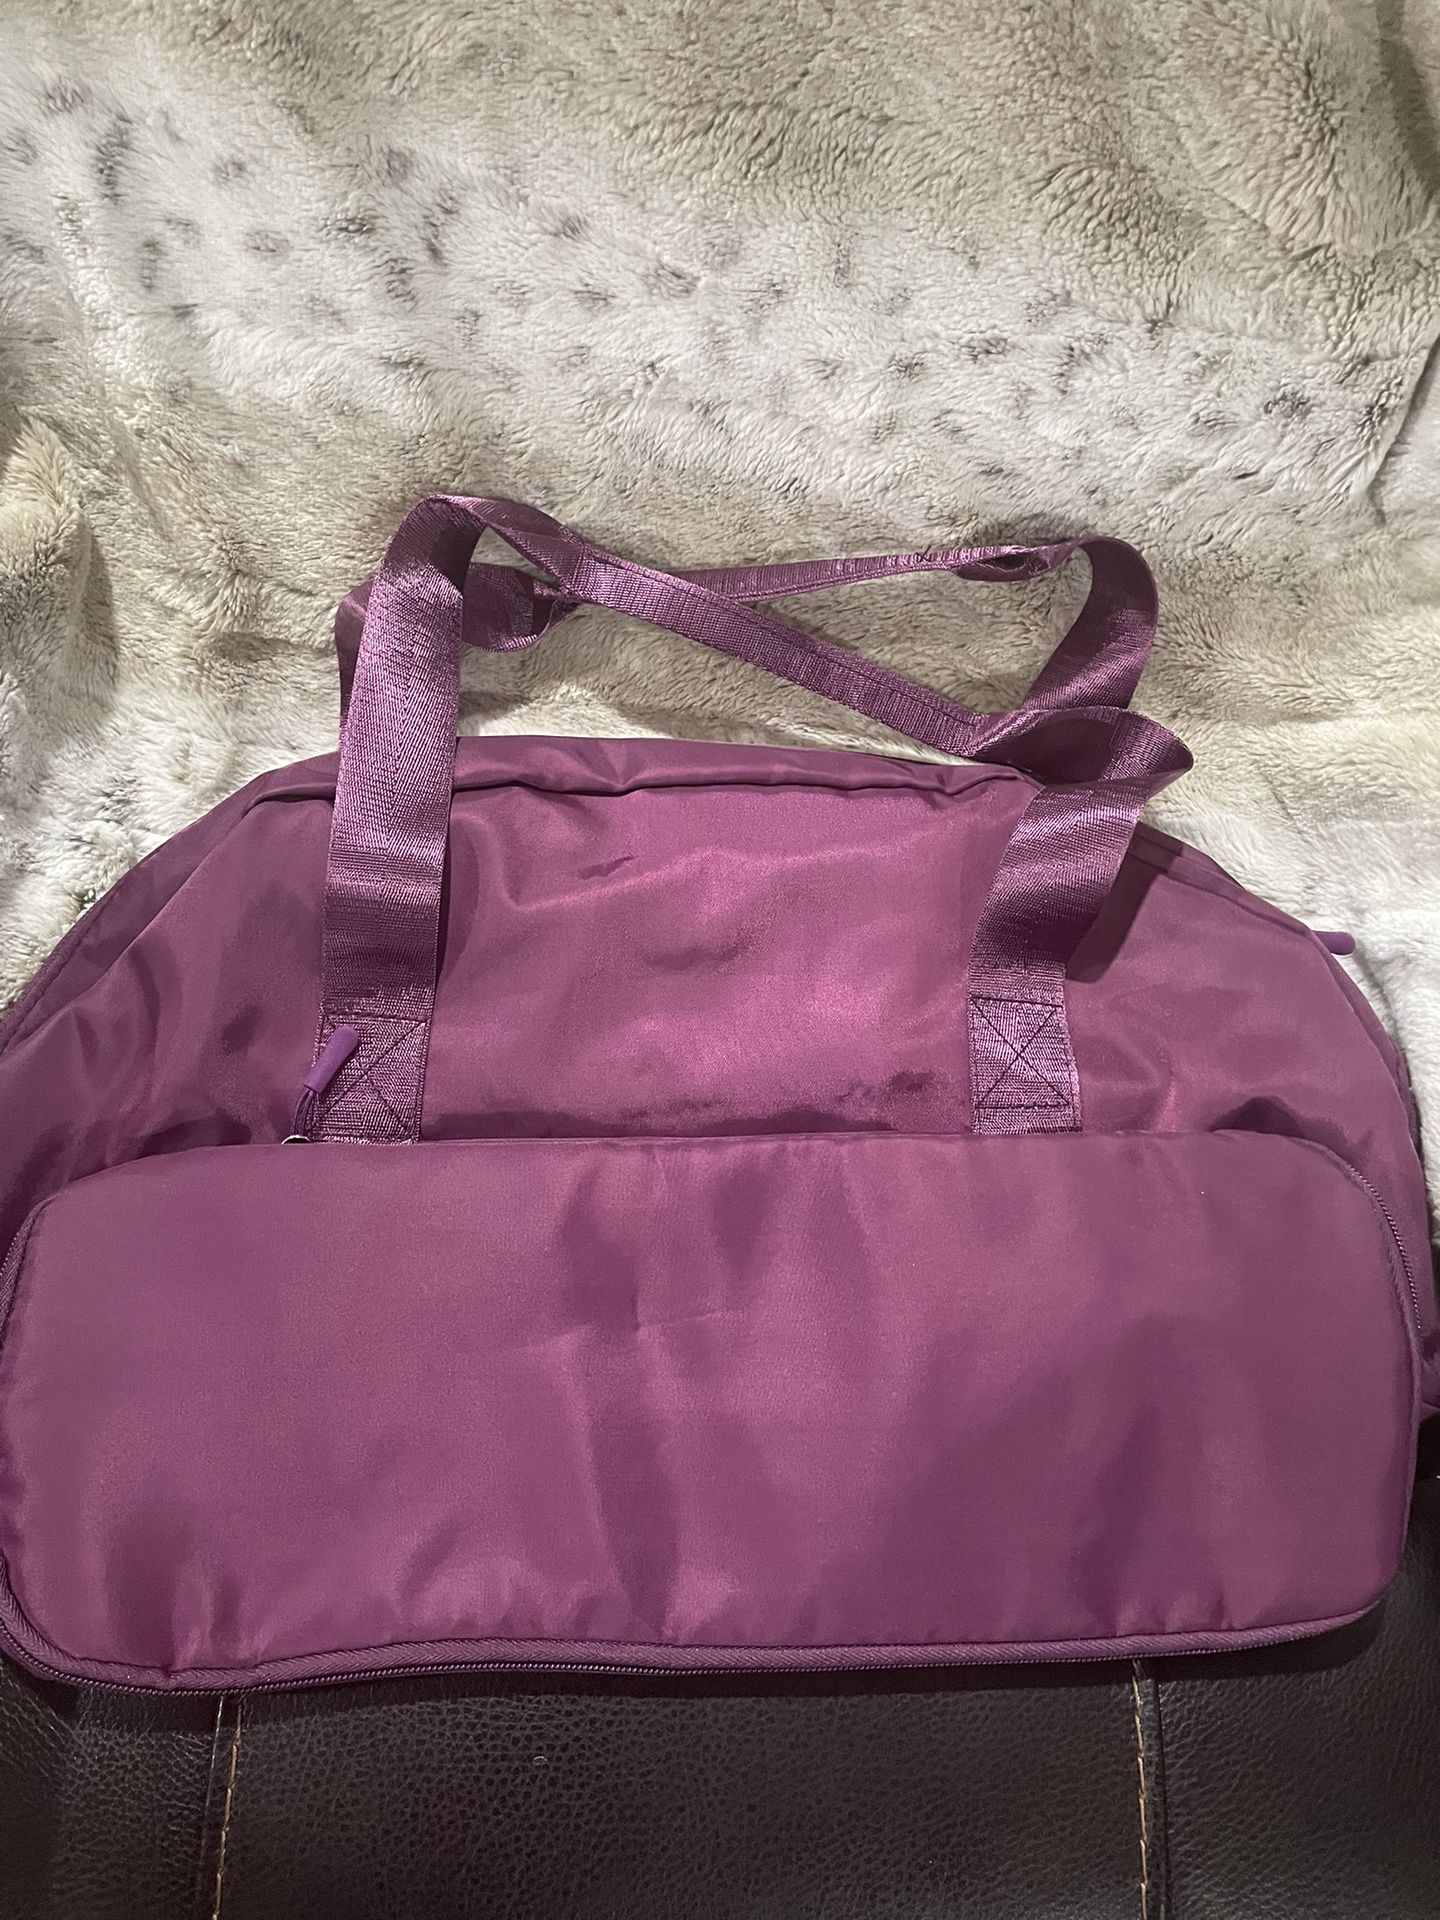 Duffel Bag For Woman 